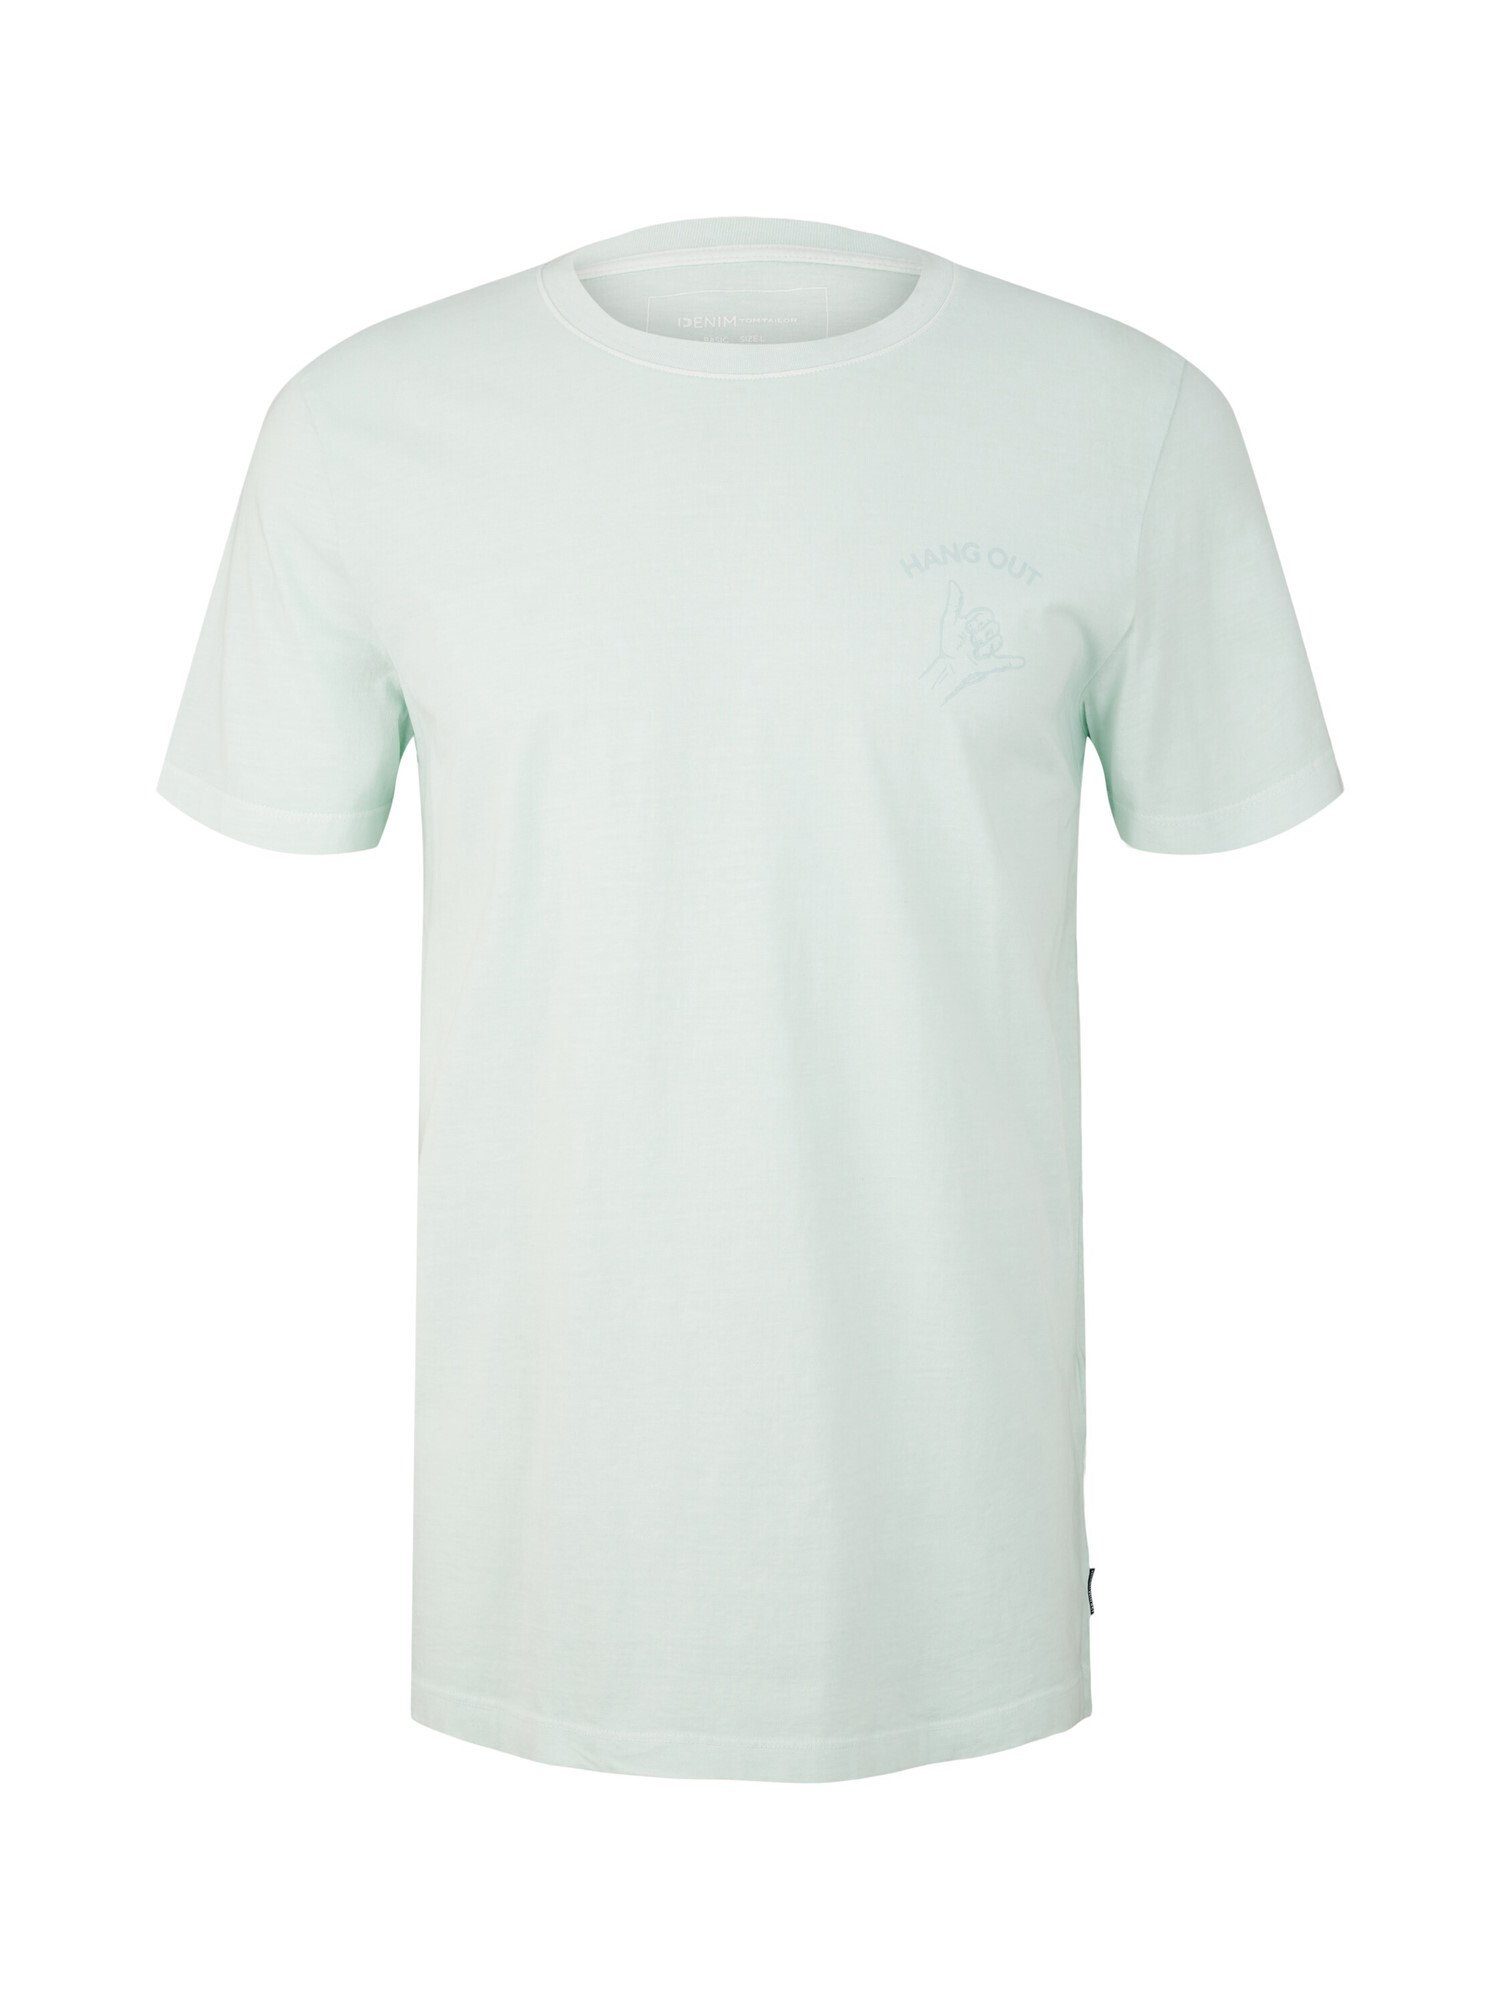 TOM TAILOR T-Shirt T-Shirt Printed grün Kurzarmshirt Rundhals